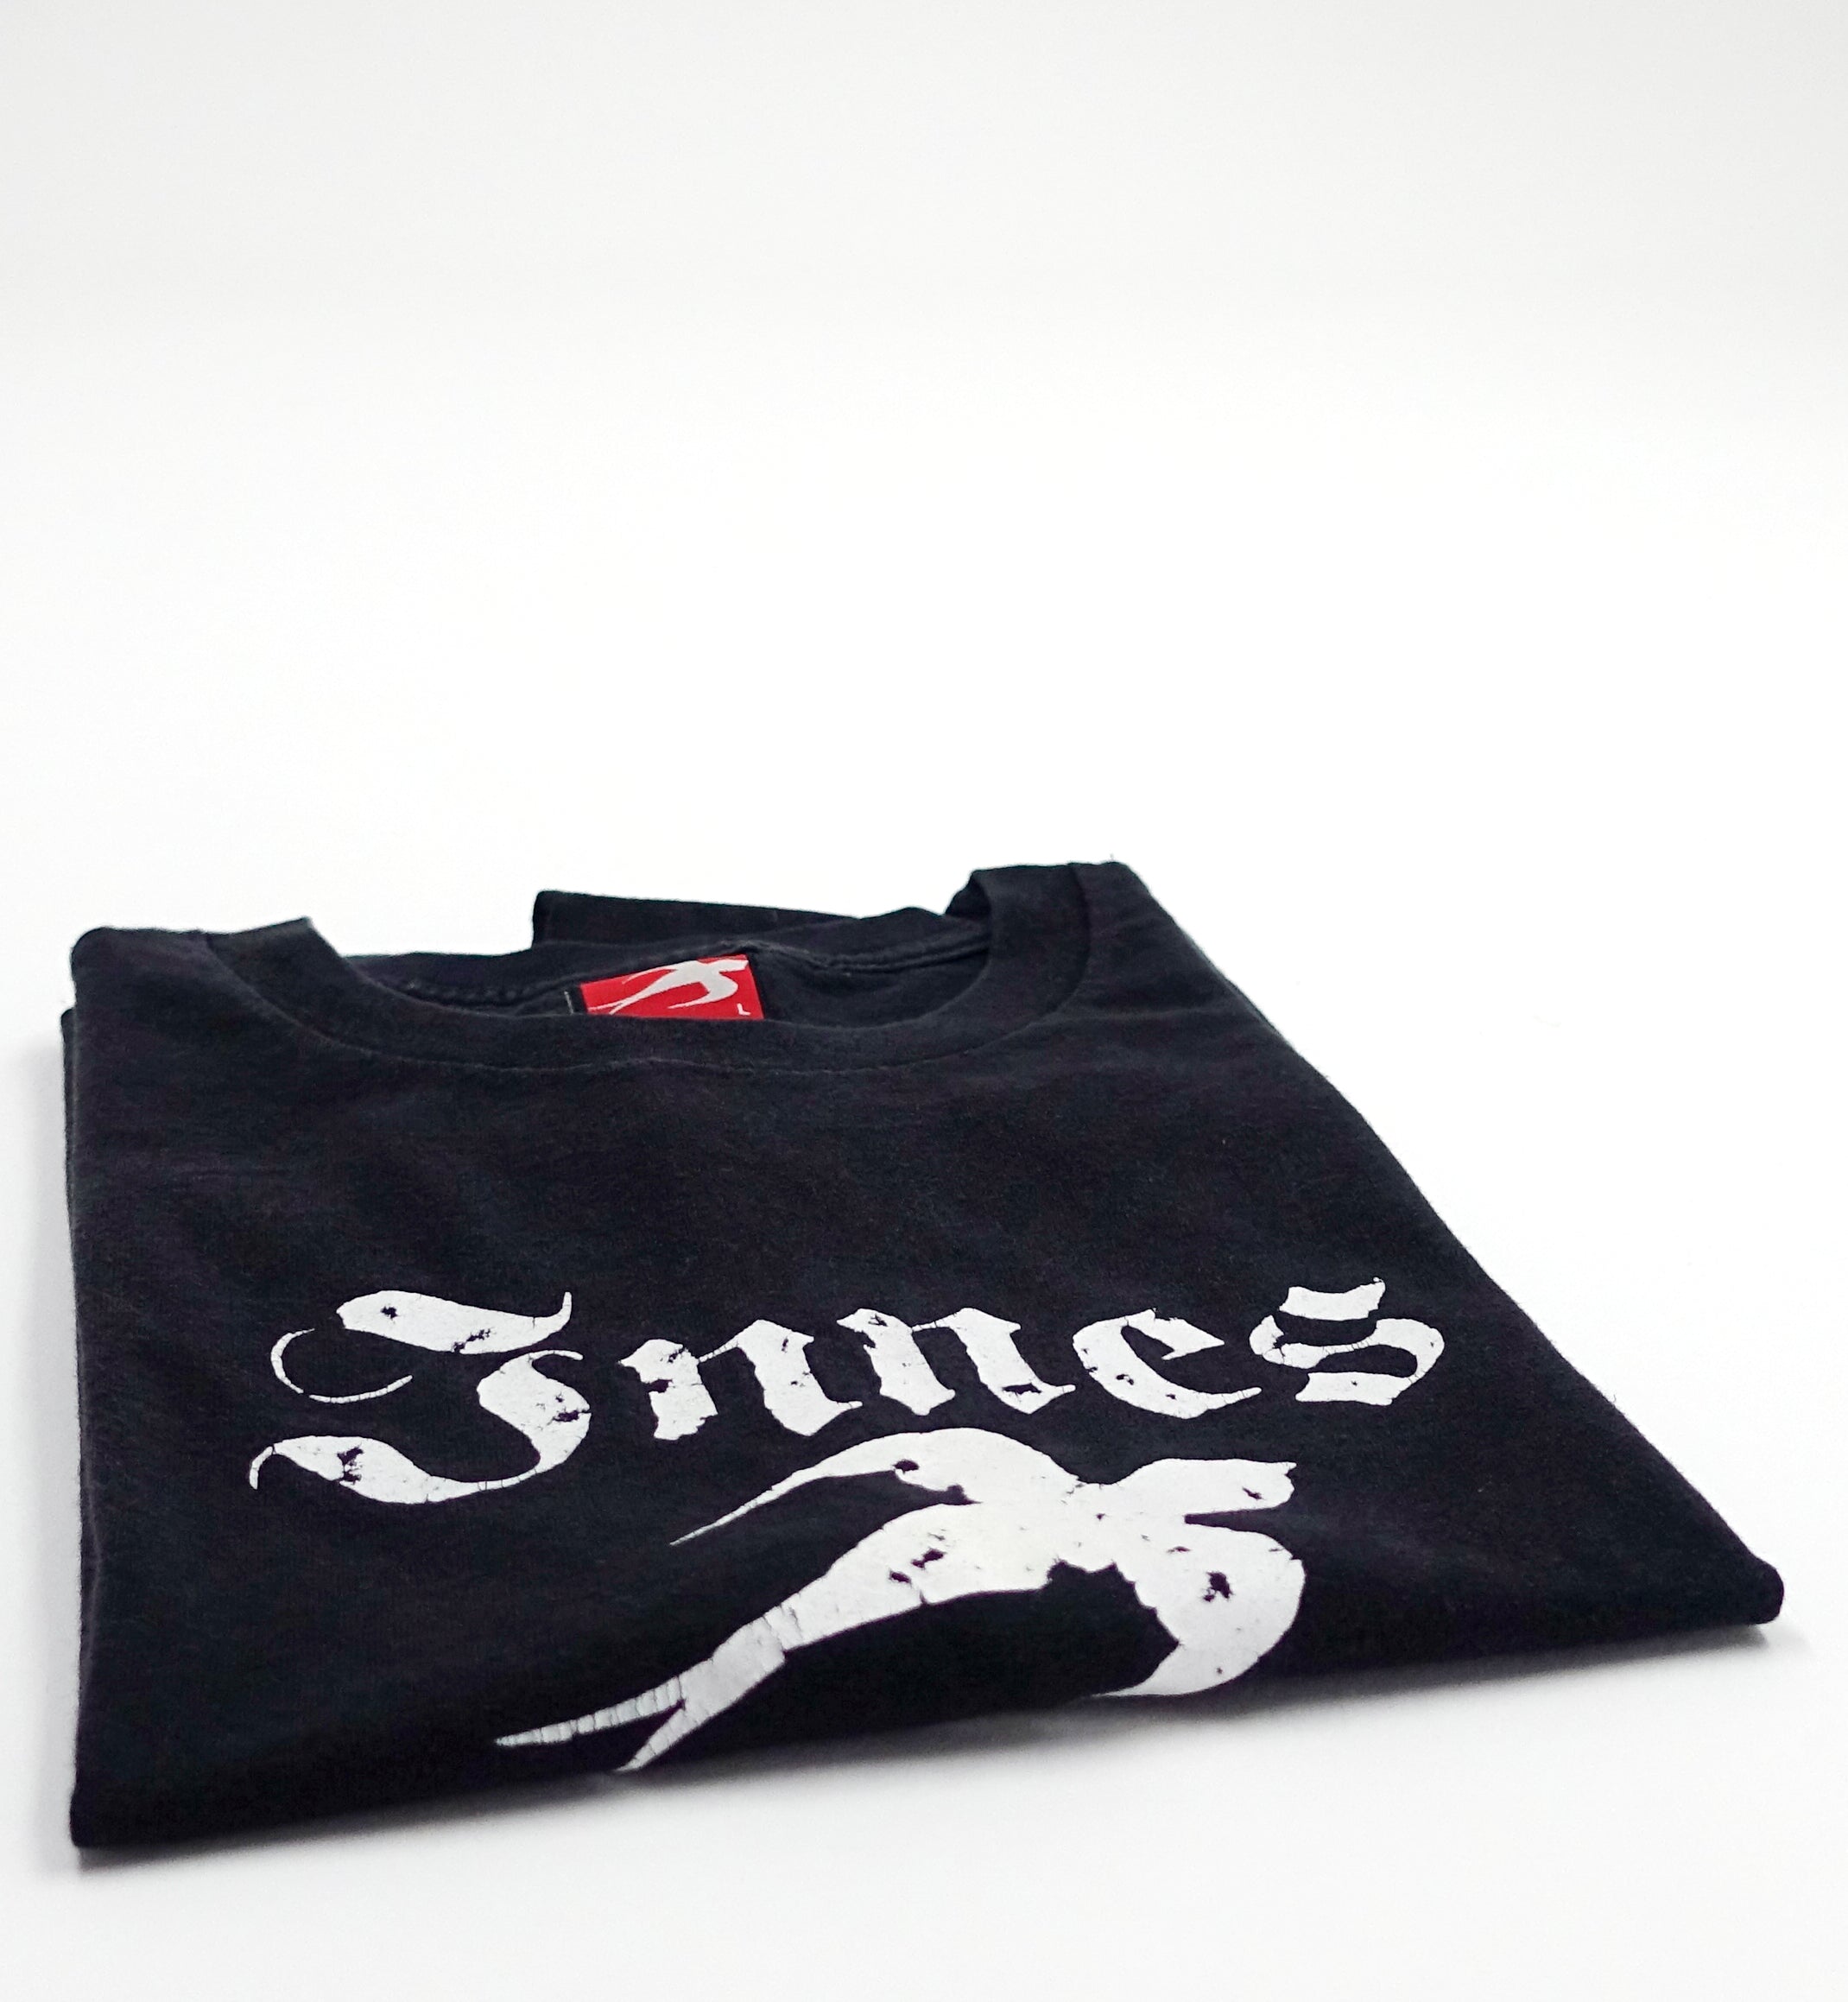 Innes Skateboard Clothing - Swallow Logo Shirt Size Large